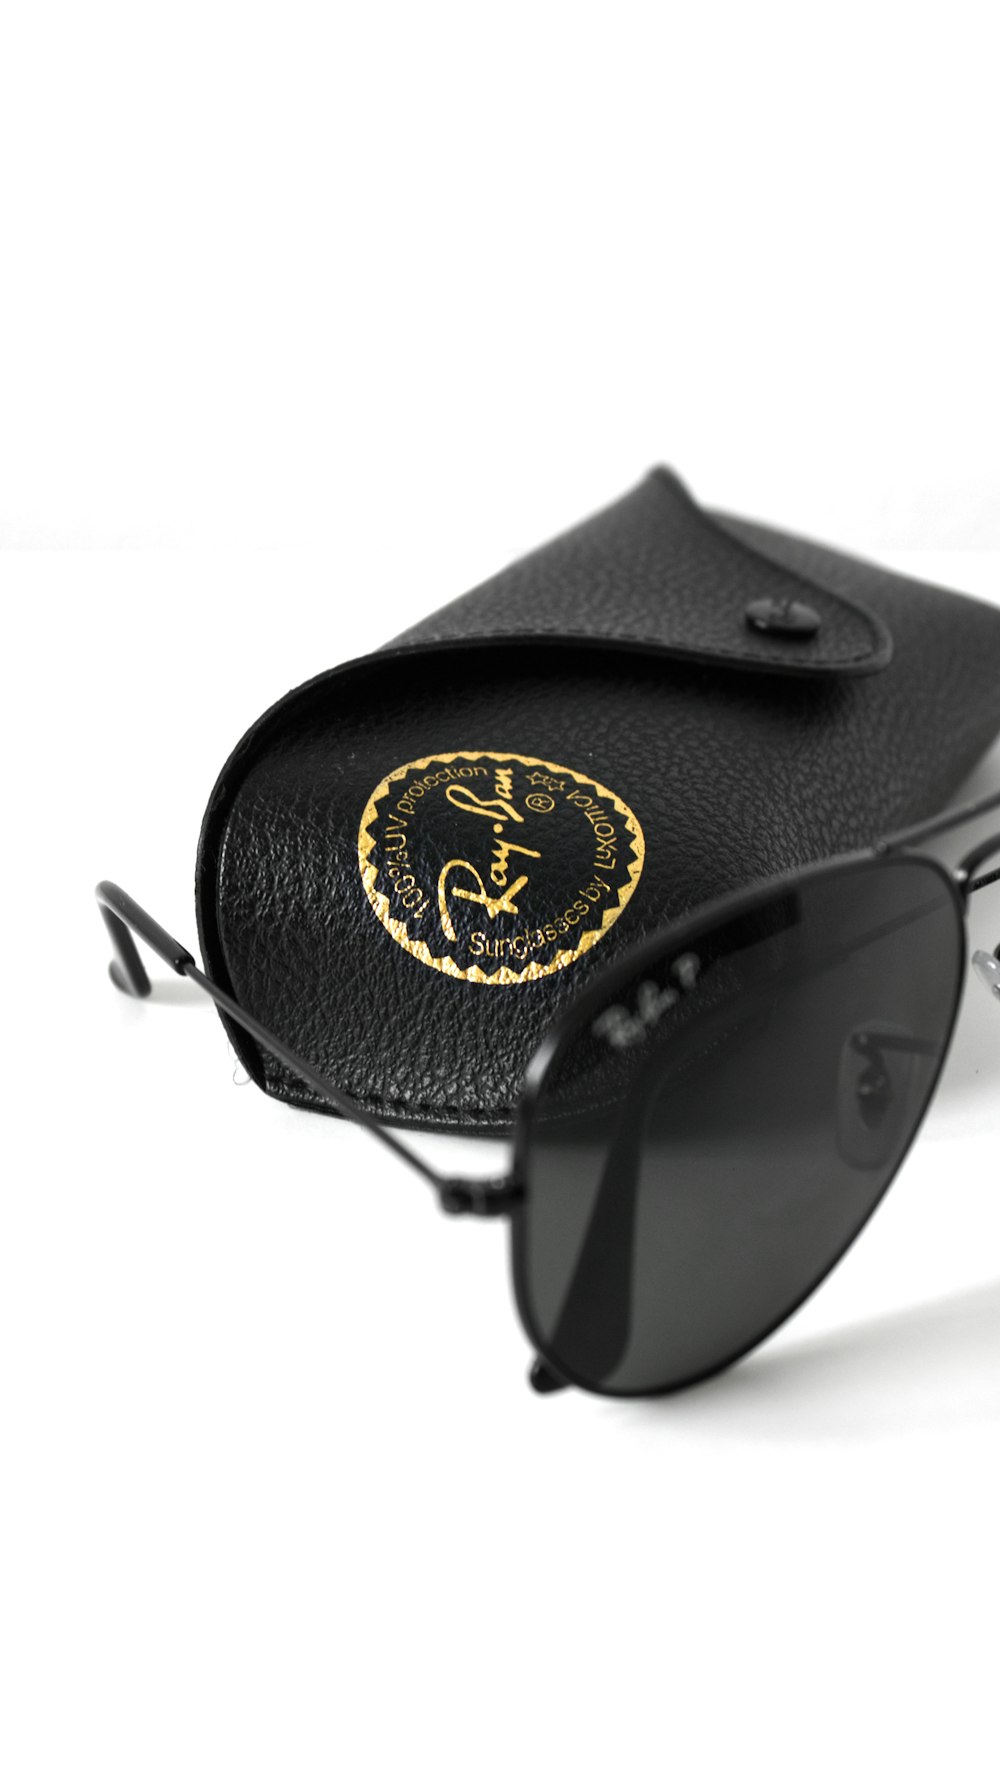 Black and gold ray ban aviator sunglasses photo – Free Black case Image on  Unsplash